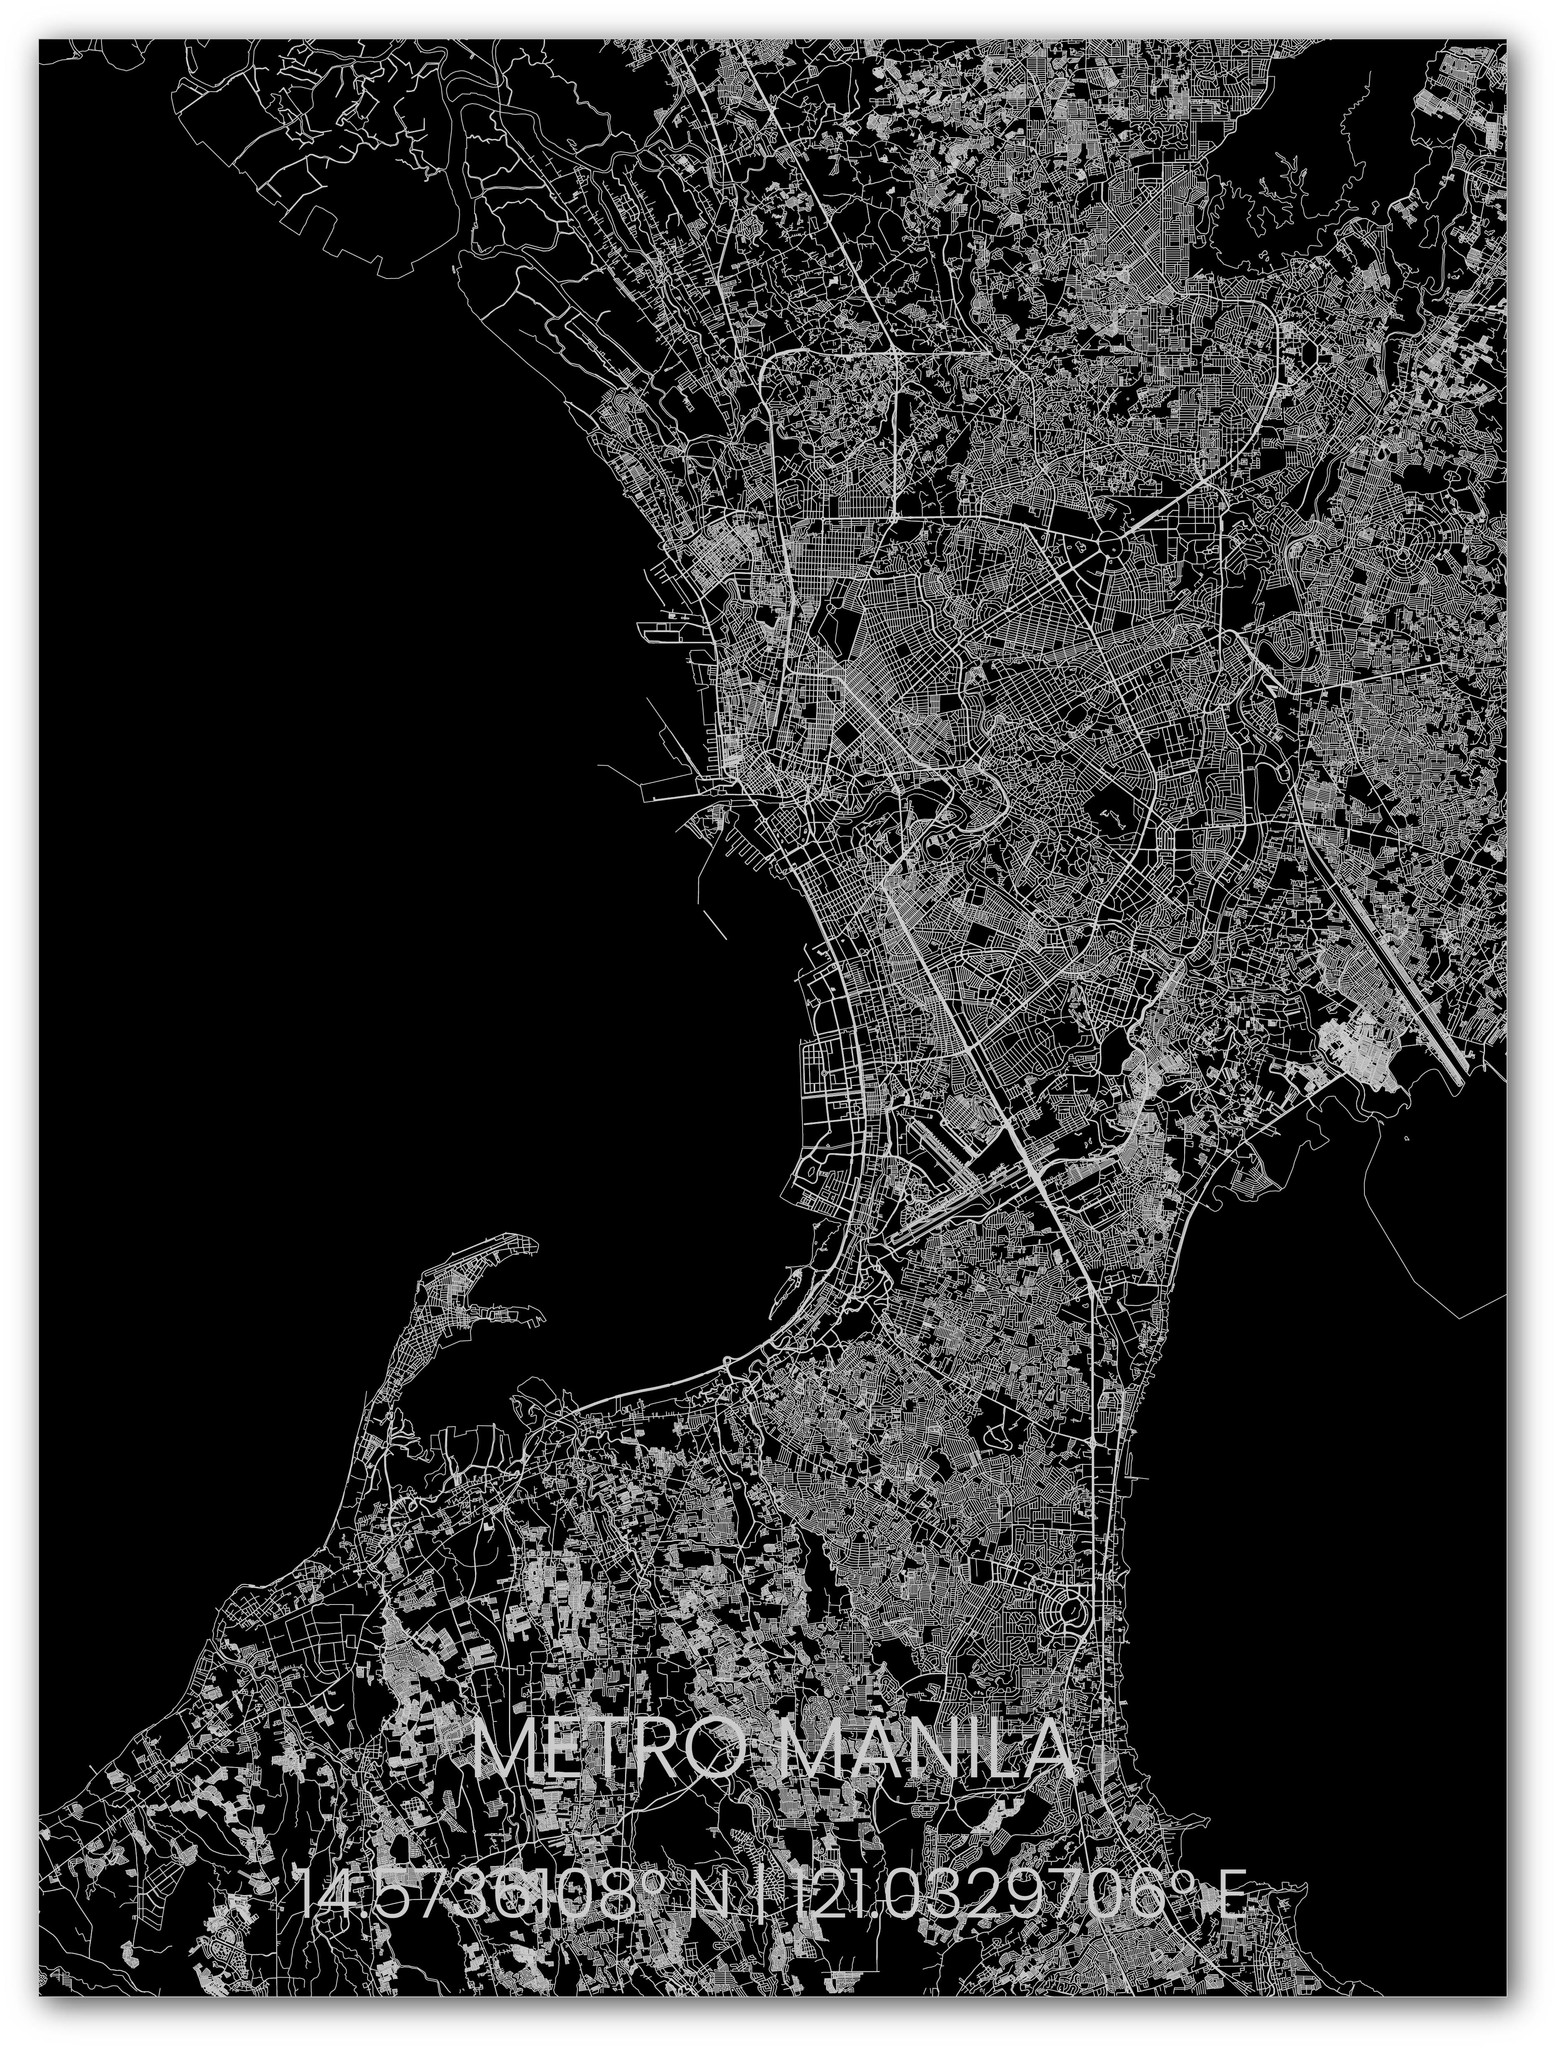 Metalen stadsplattegrond Metro Manila-1